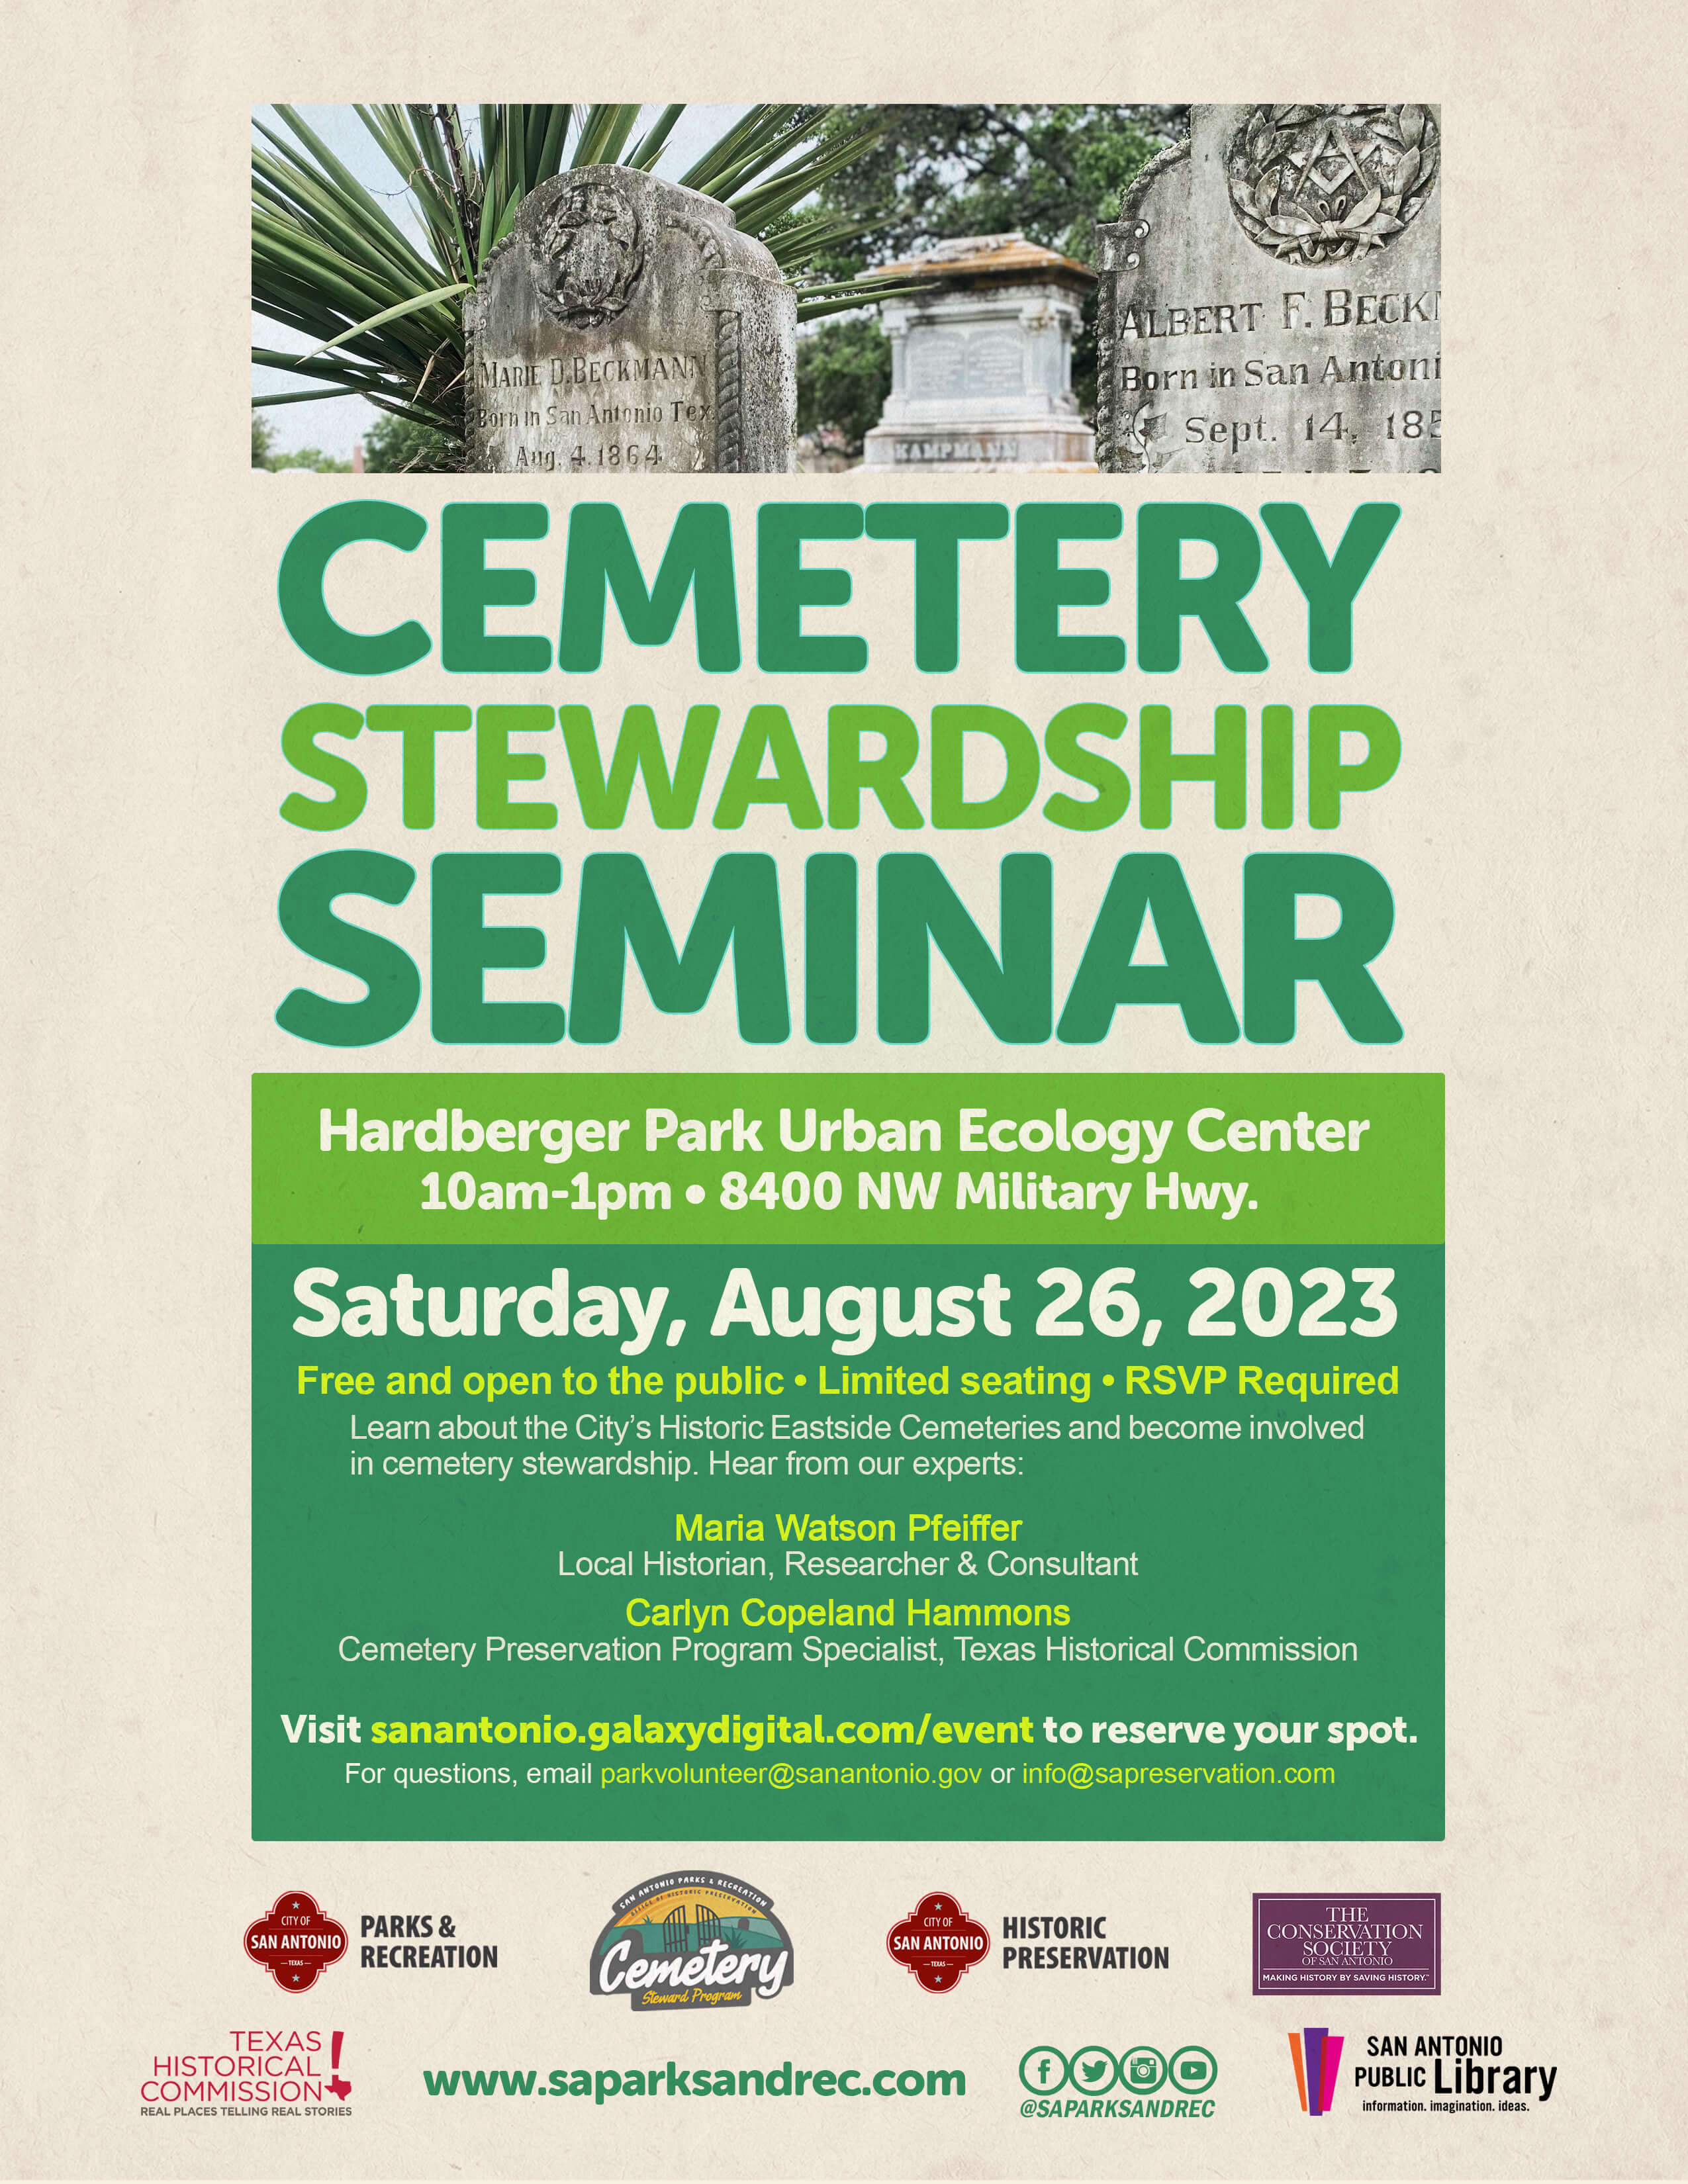 Flyer for Cemetery Stewardship Seminar, Aug. 26, 2023